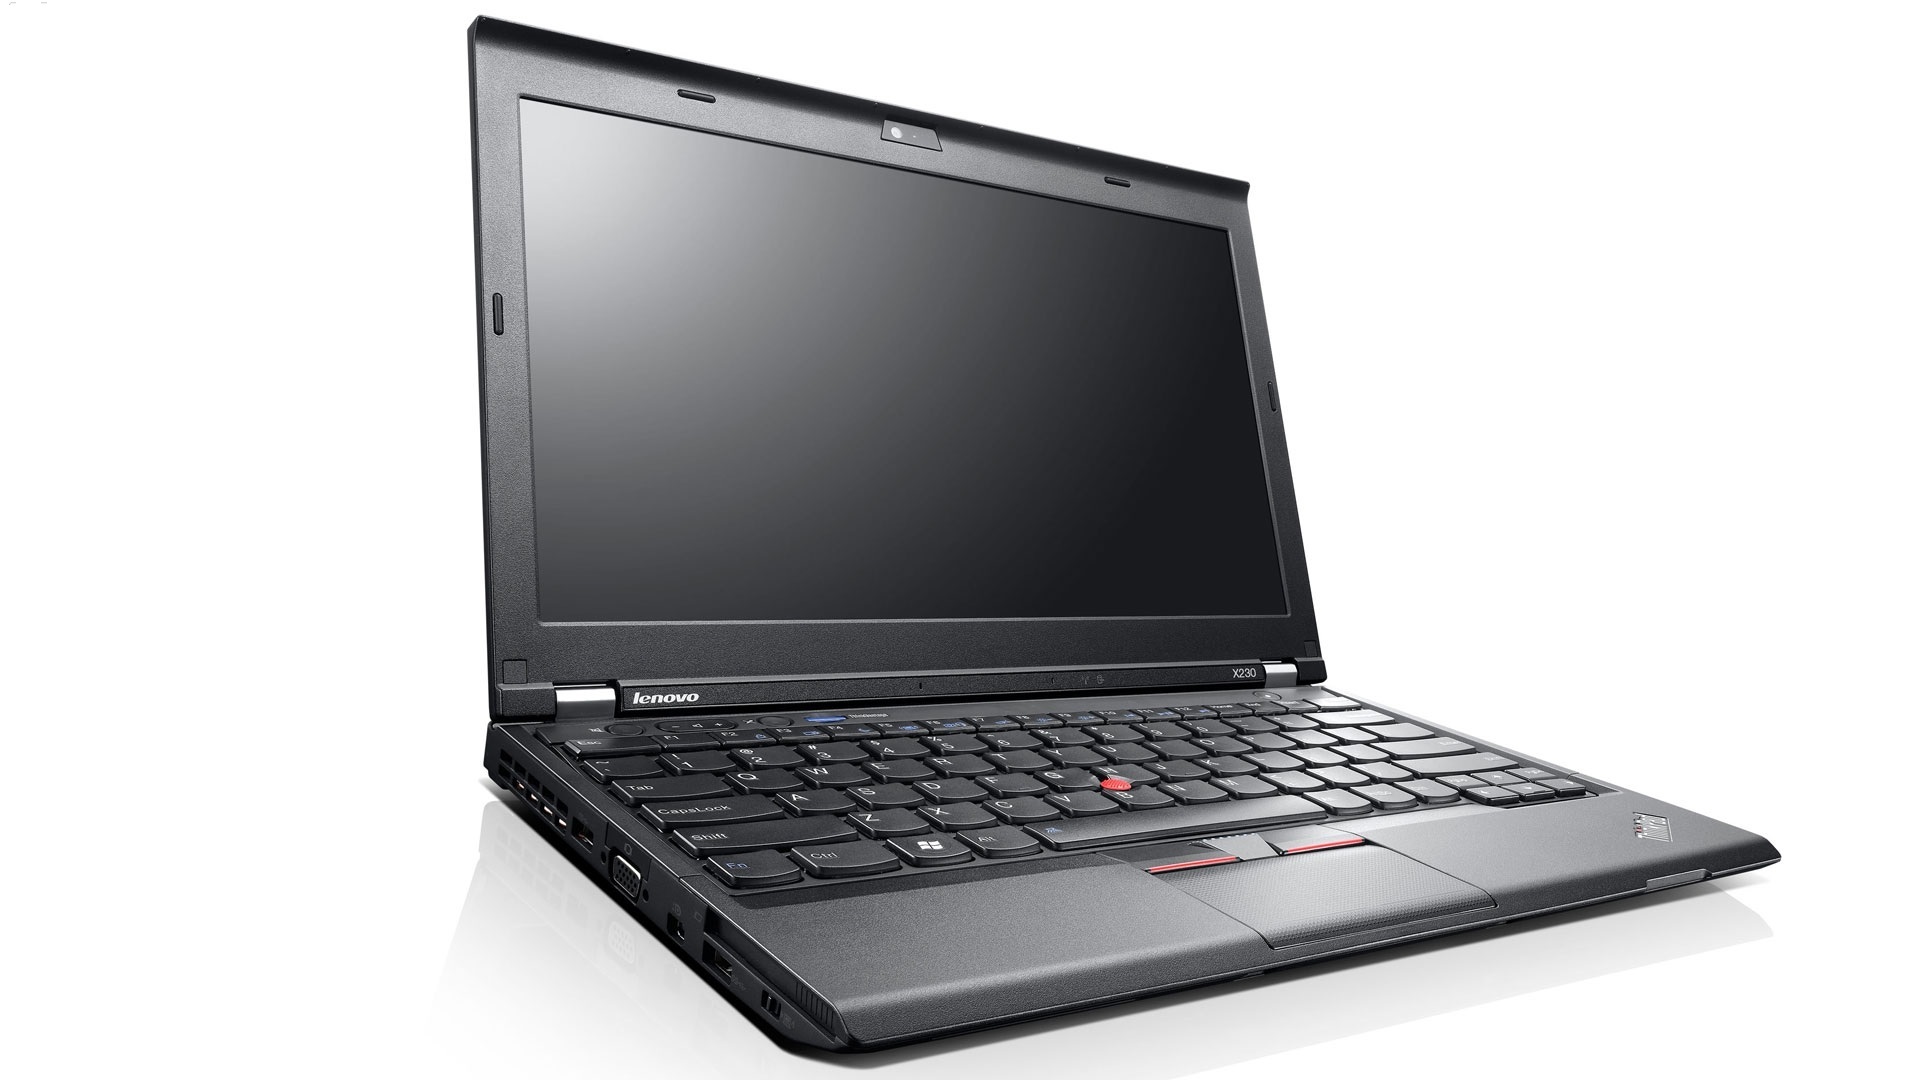 Laptop Lenovo ThinkPad X230i (2306-CTO) - Intel Core i3-3120M 2.5Ghz, 4GB RAM, 500GB HDD, VGA Intel HD Graphics 4000, 12.5 inch